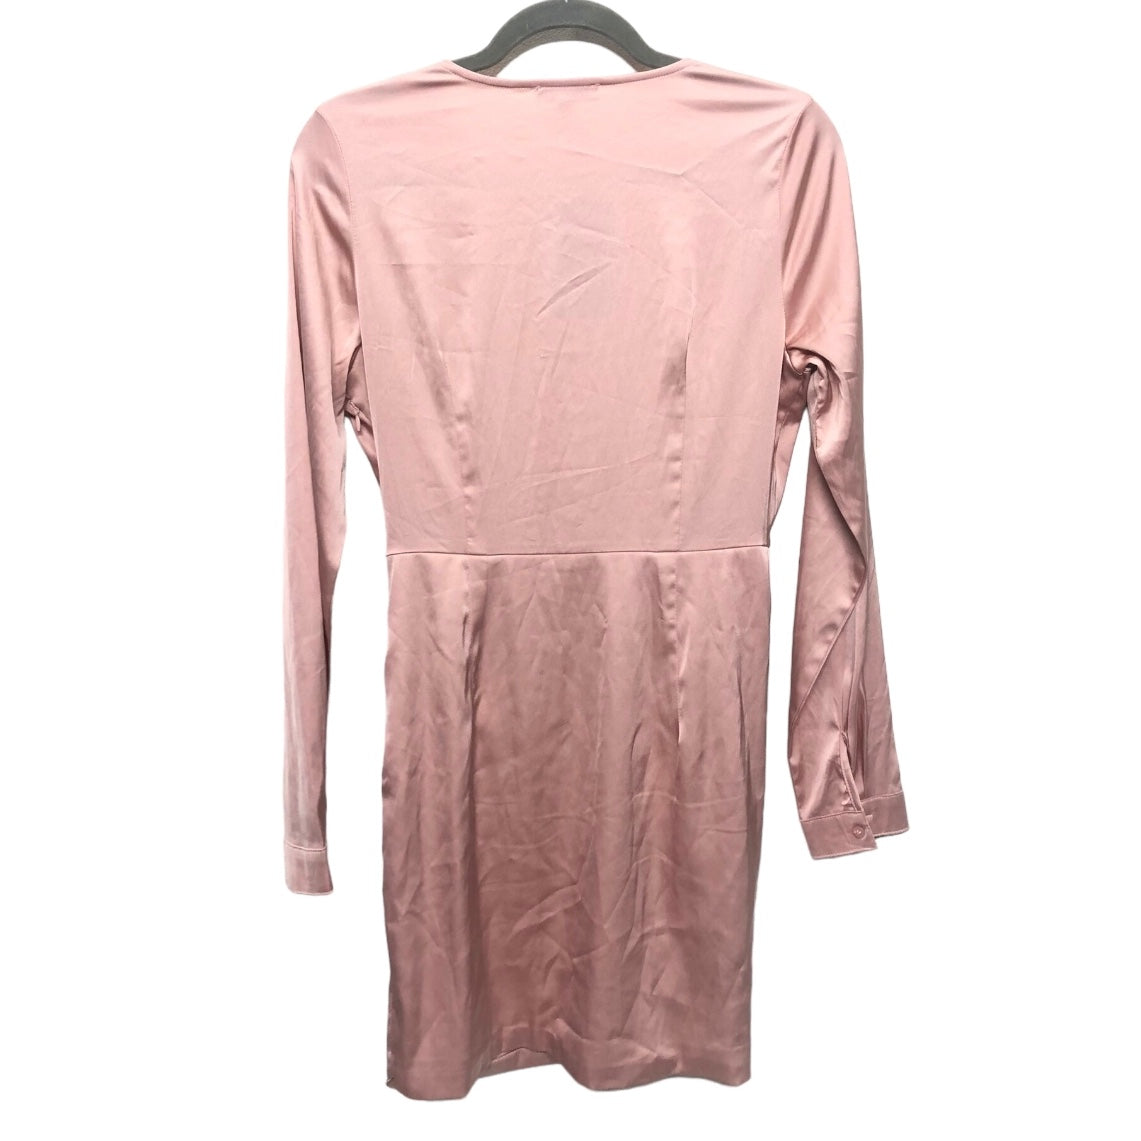 Pink Dress Casual Short Fashion Nova, Size M